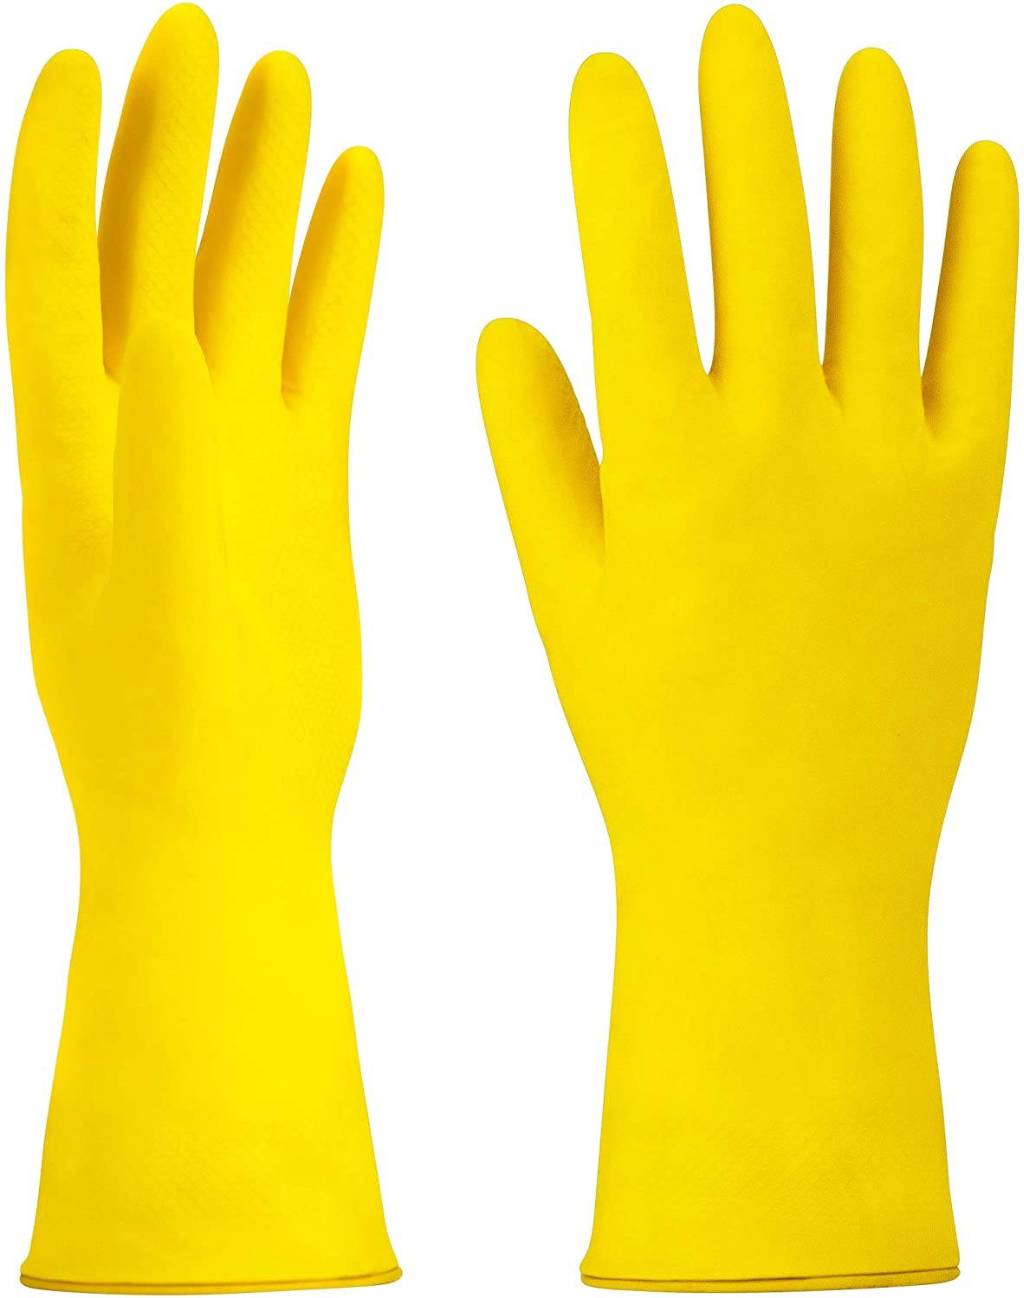 Rubber Save Gloves বাংলাদেশ - 1140235